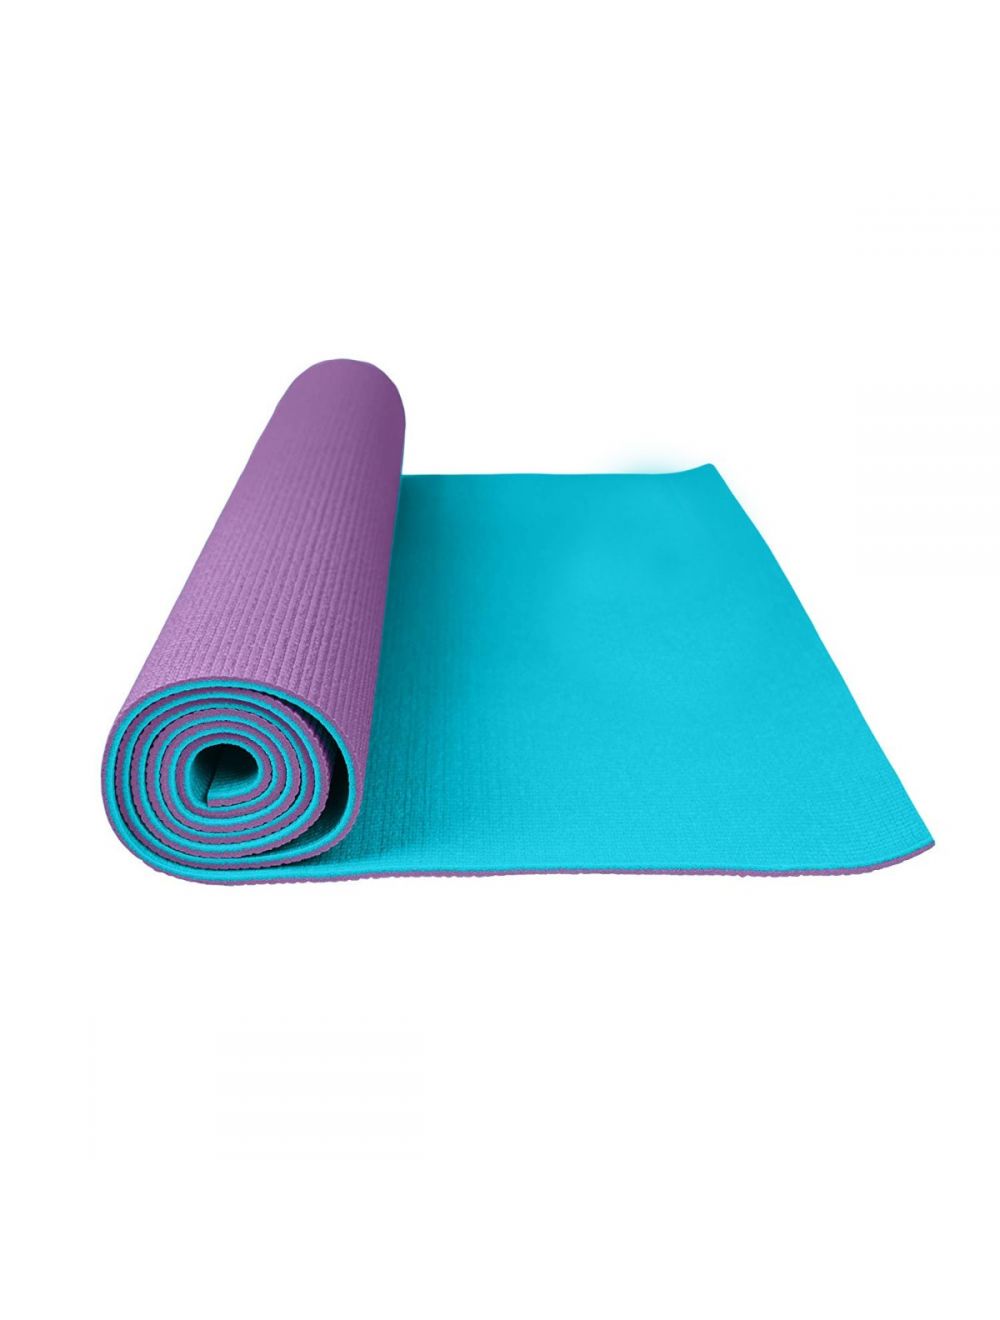 5mm Double-layer two colors Anti-slip PVC Yoga Mat